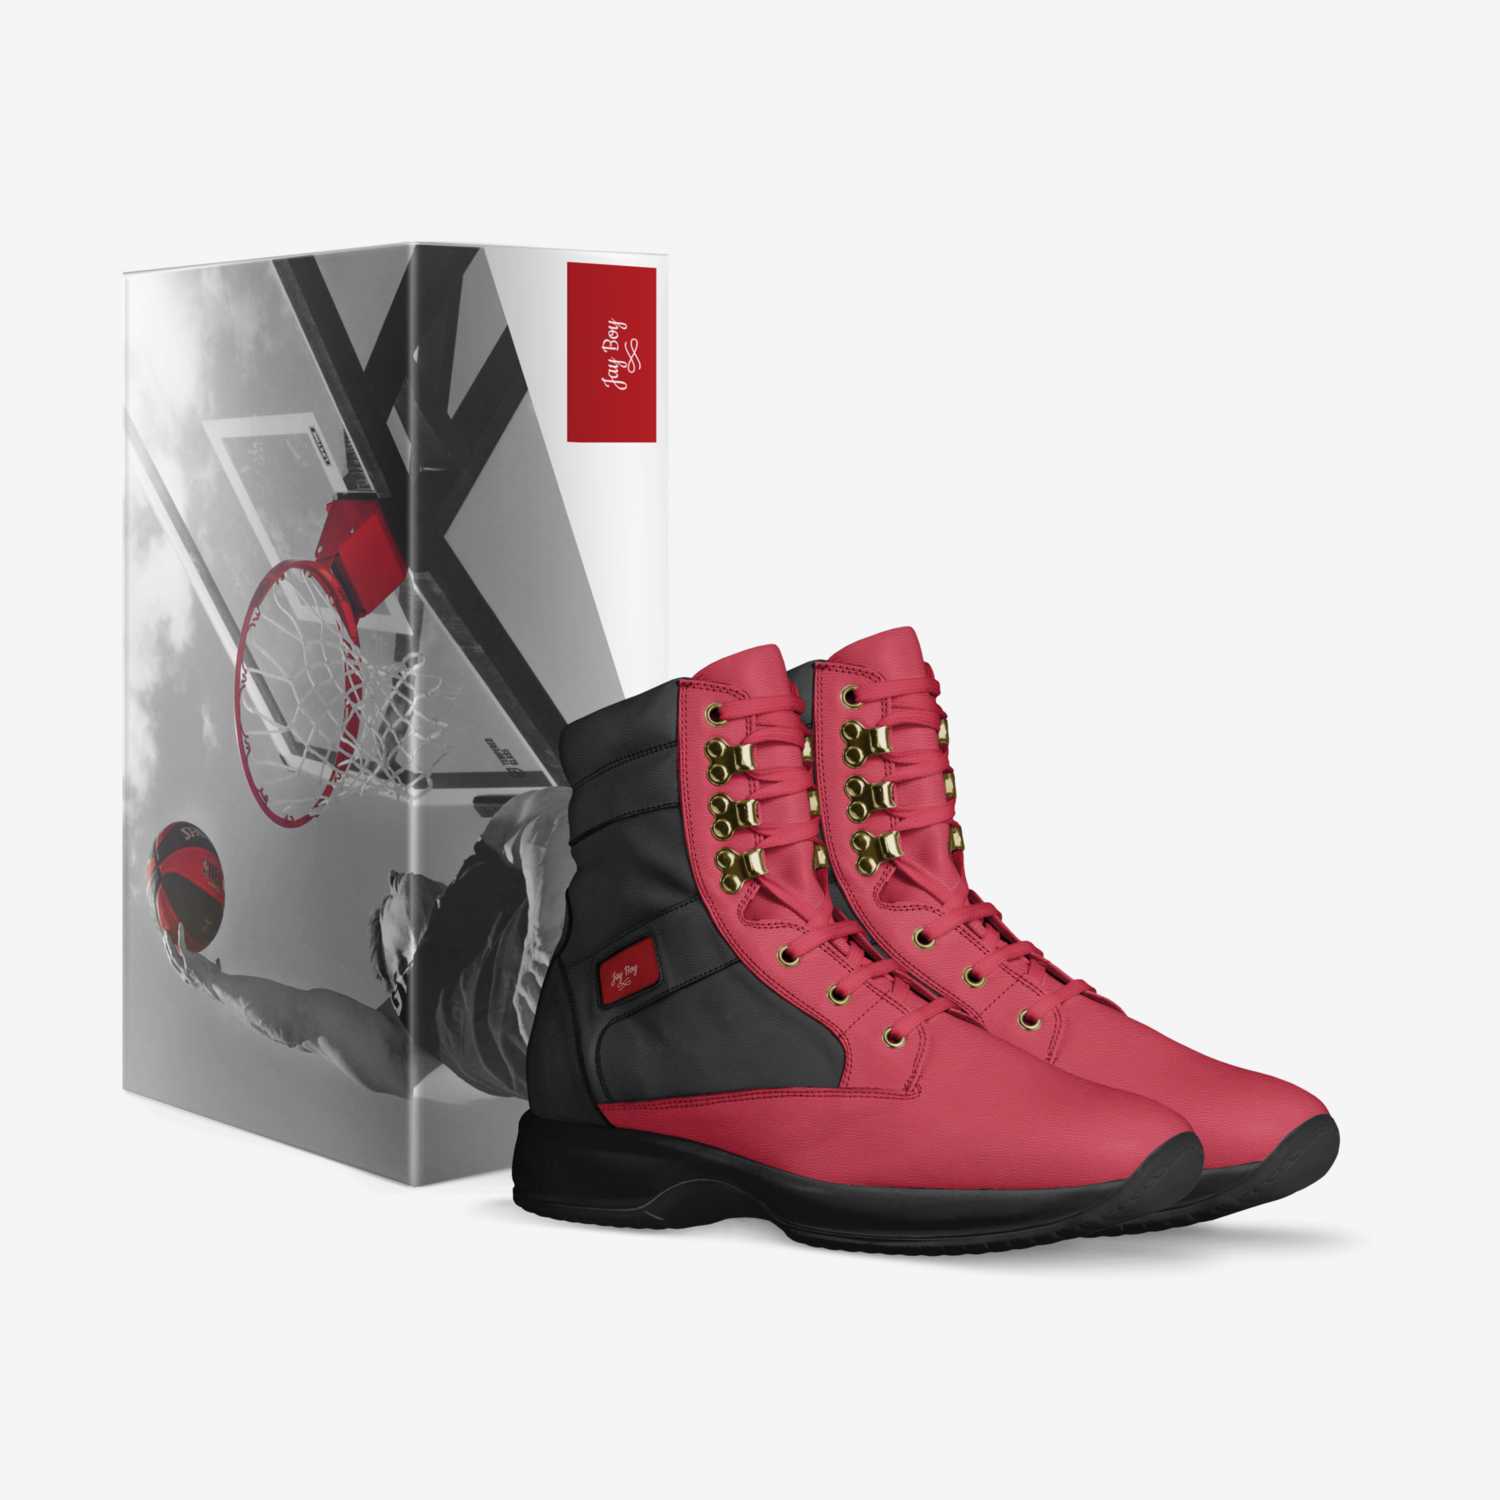 Jay Boy custom made in Italy shoes by Maria Feliciano | Box view